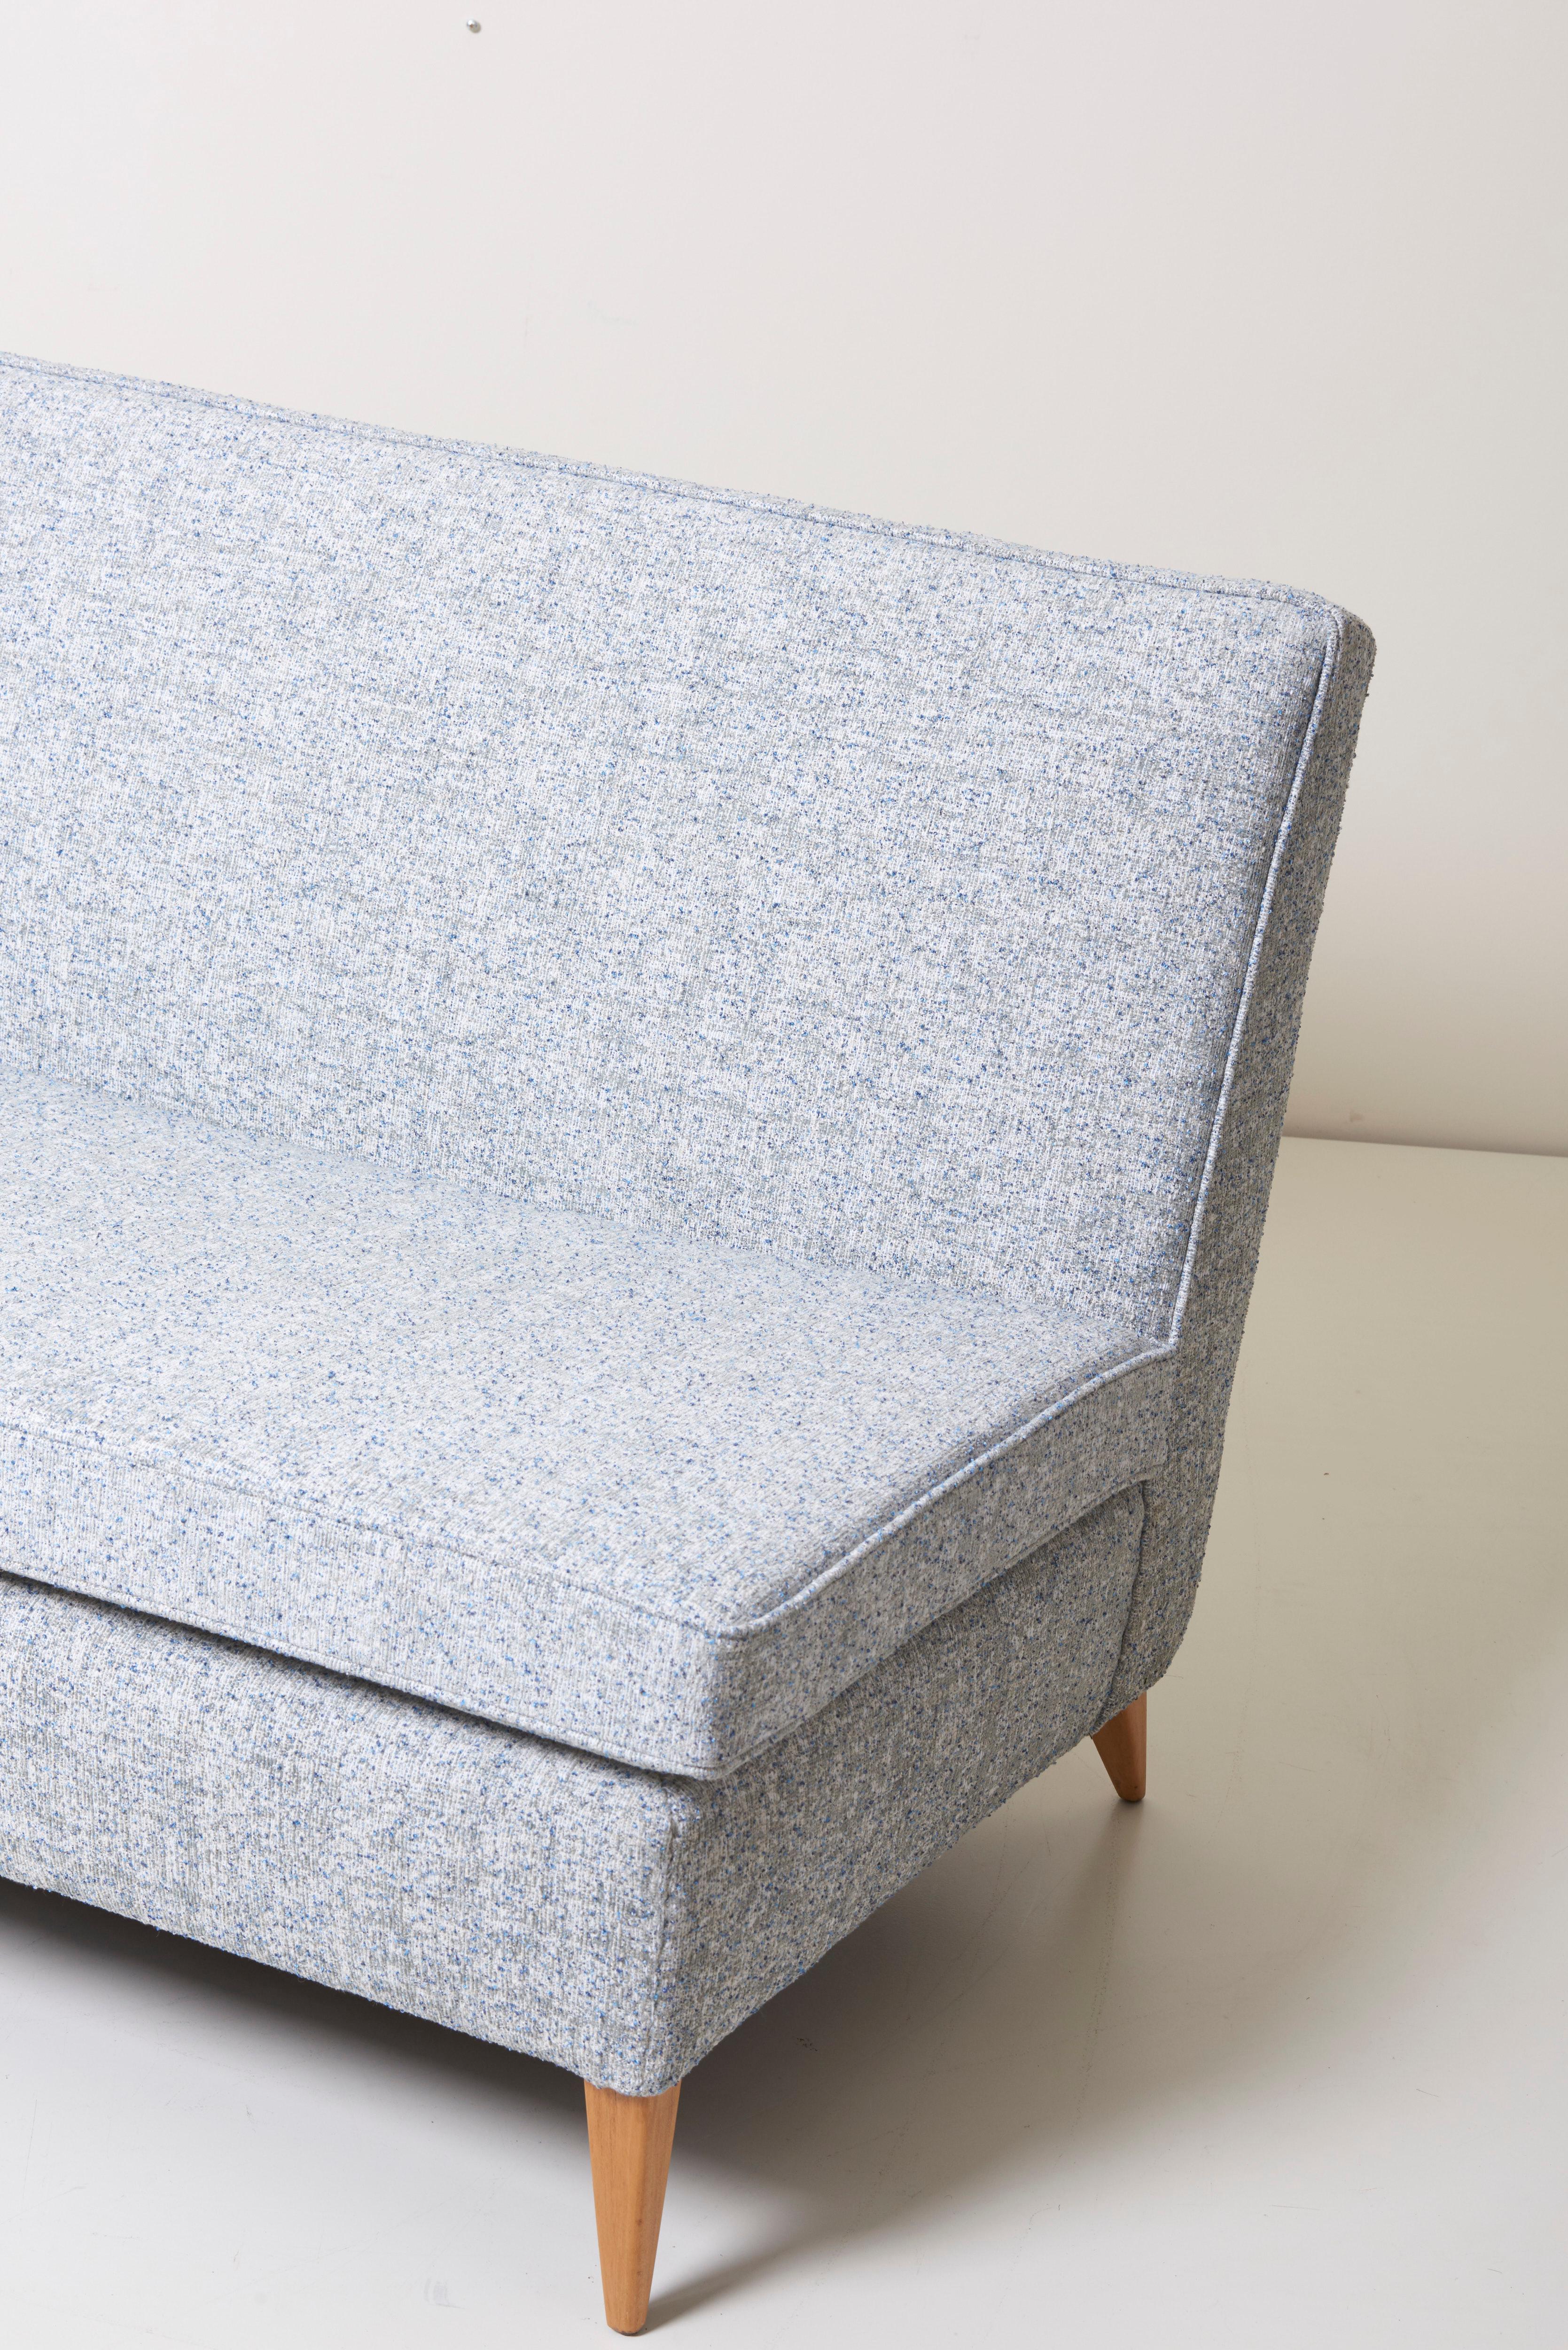 Paul McCobb Sectional Corner Sofa Custom Craft/ Planner Group Newly Upholstered For Sale 4